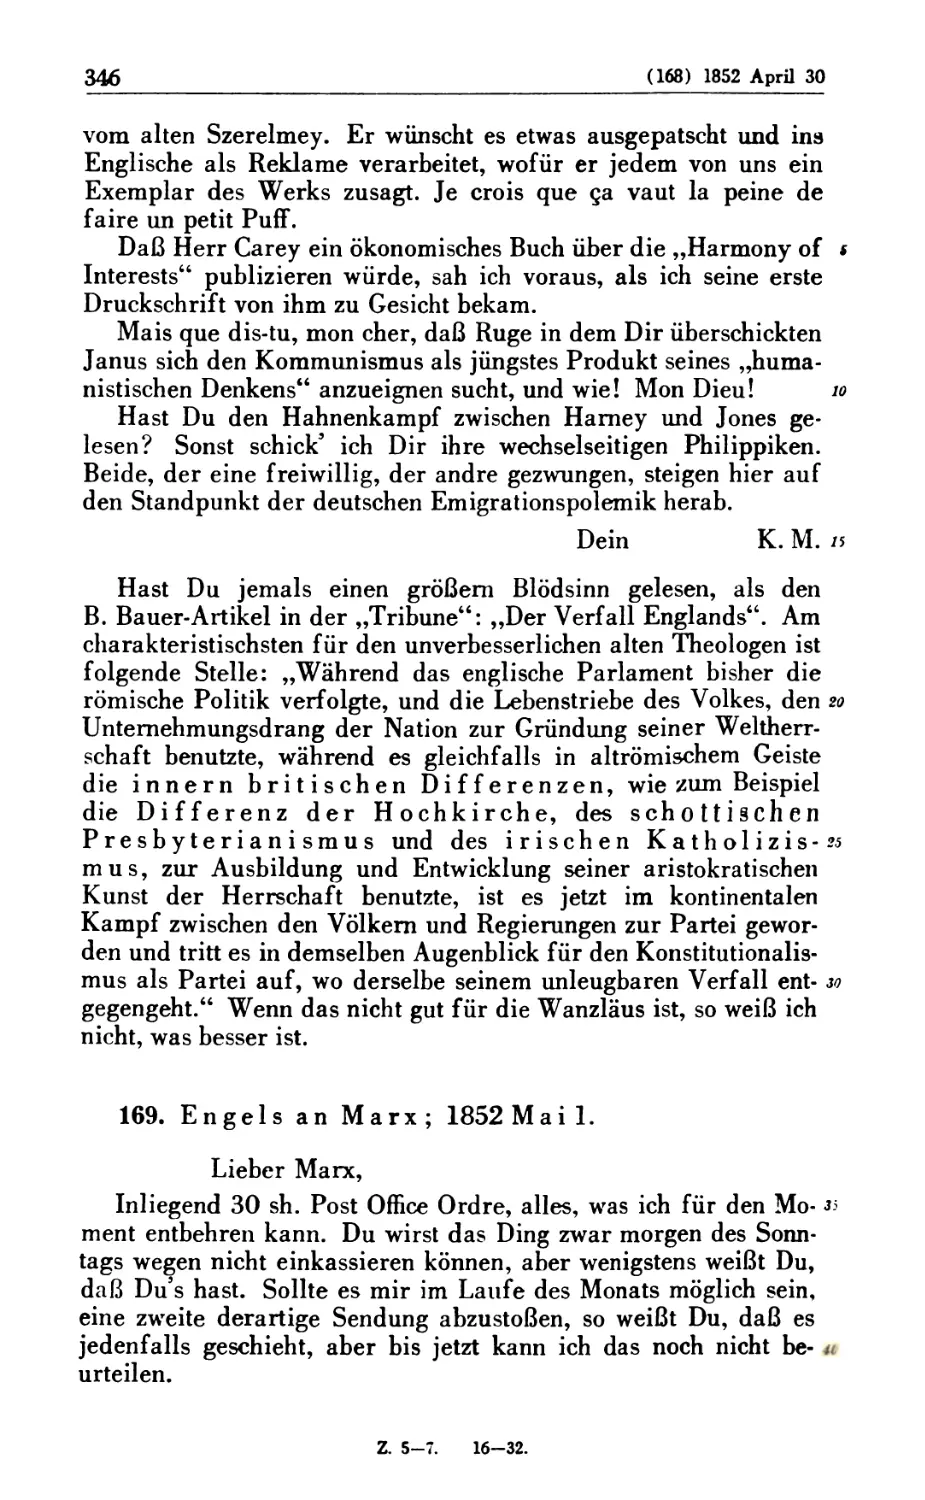 169. Engels an Marx; 1852 Mai 1